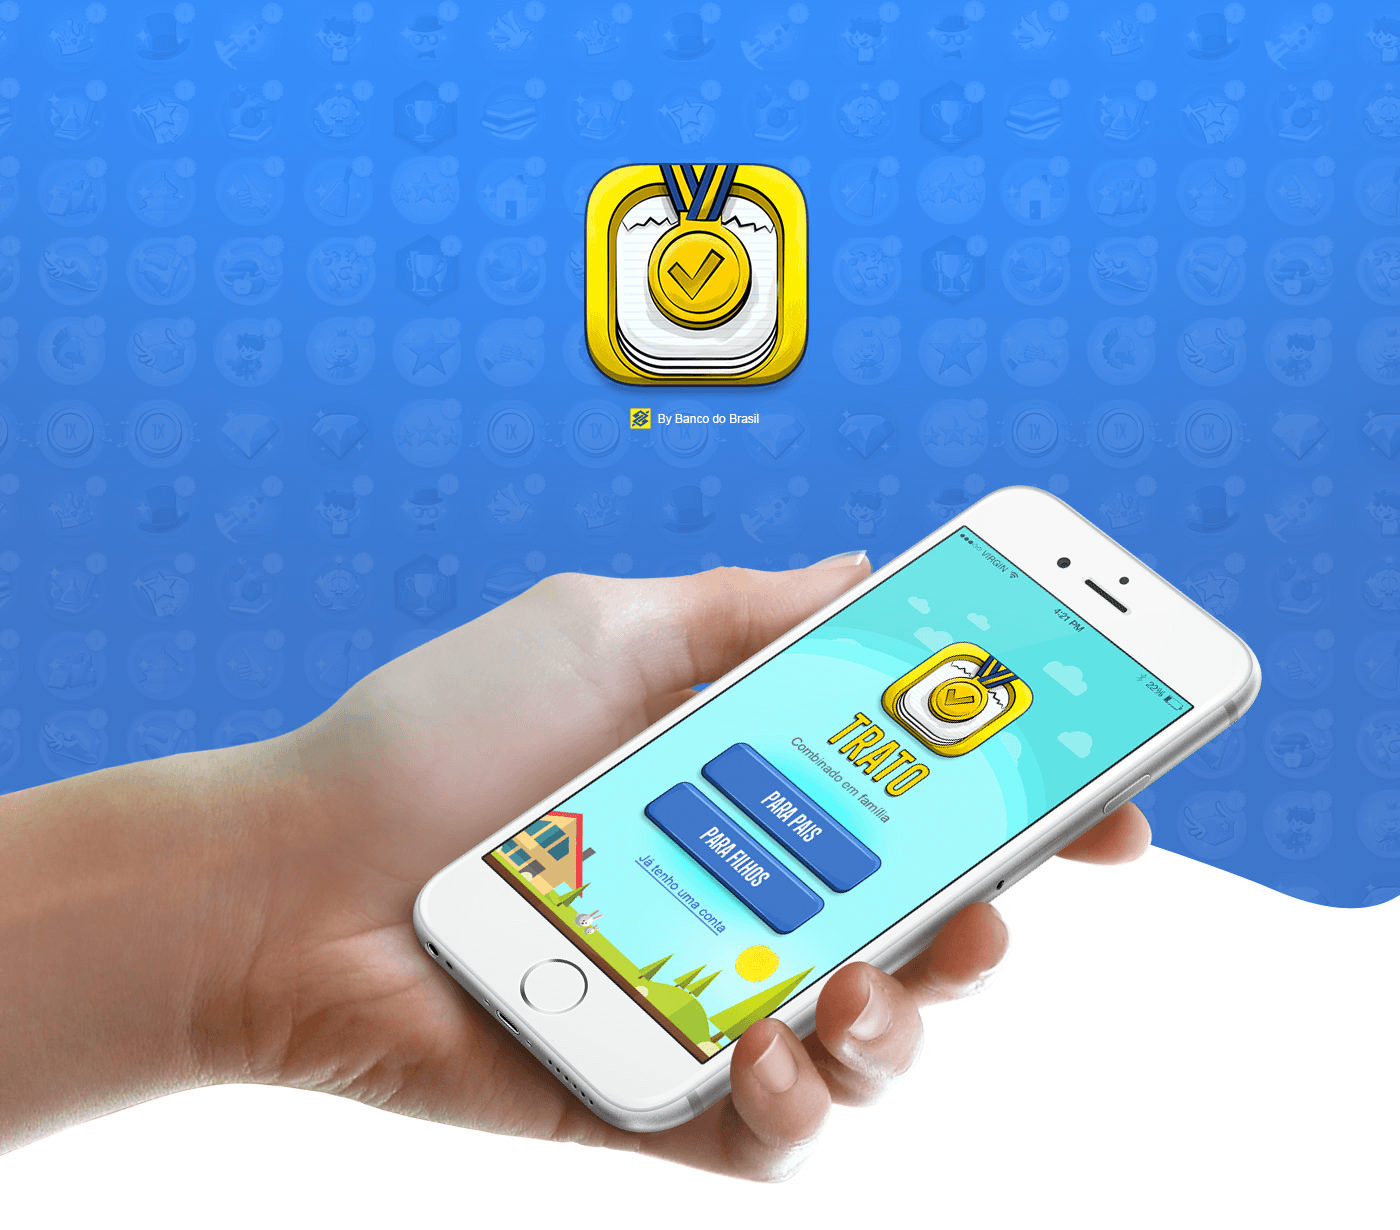 app ios android trato Banco do Brasil children kids parents